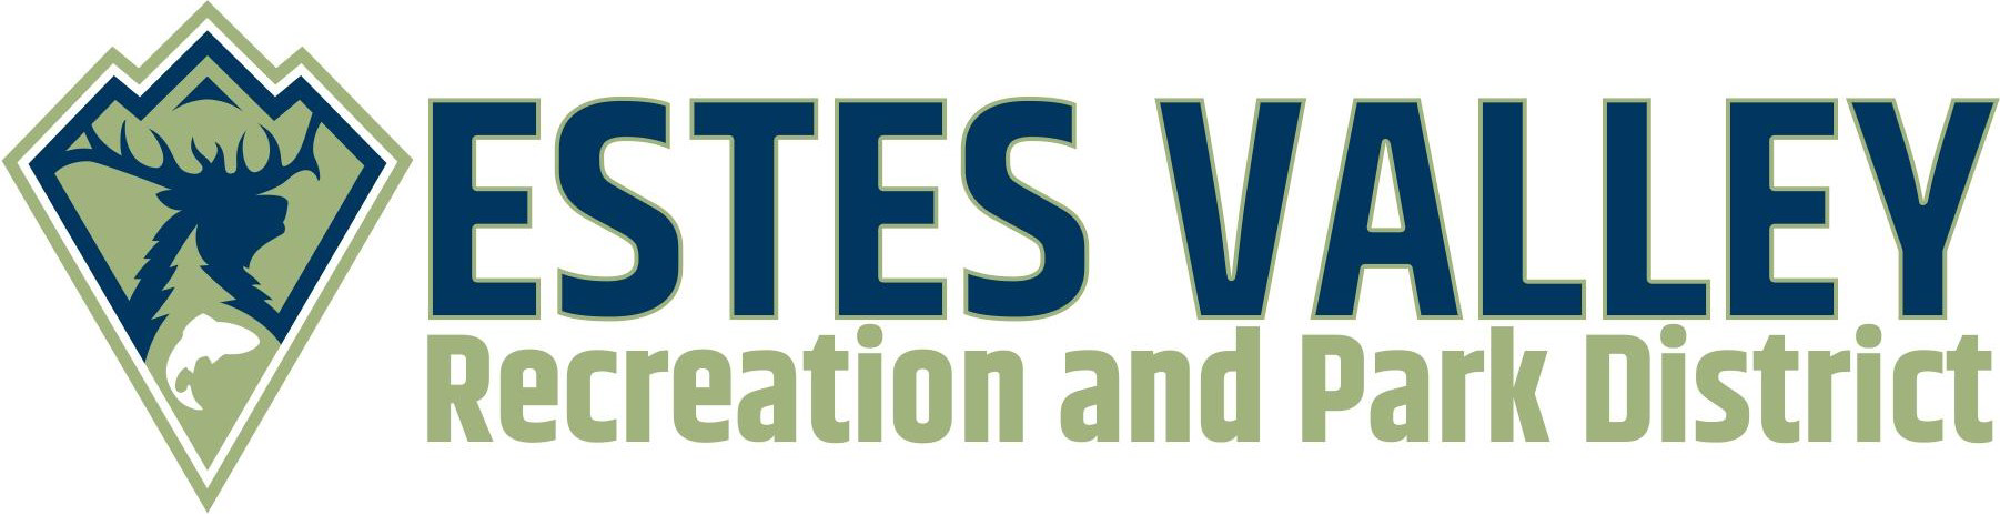 Estes Valley Recreation and Park District Logo